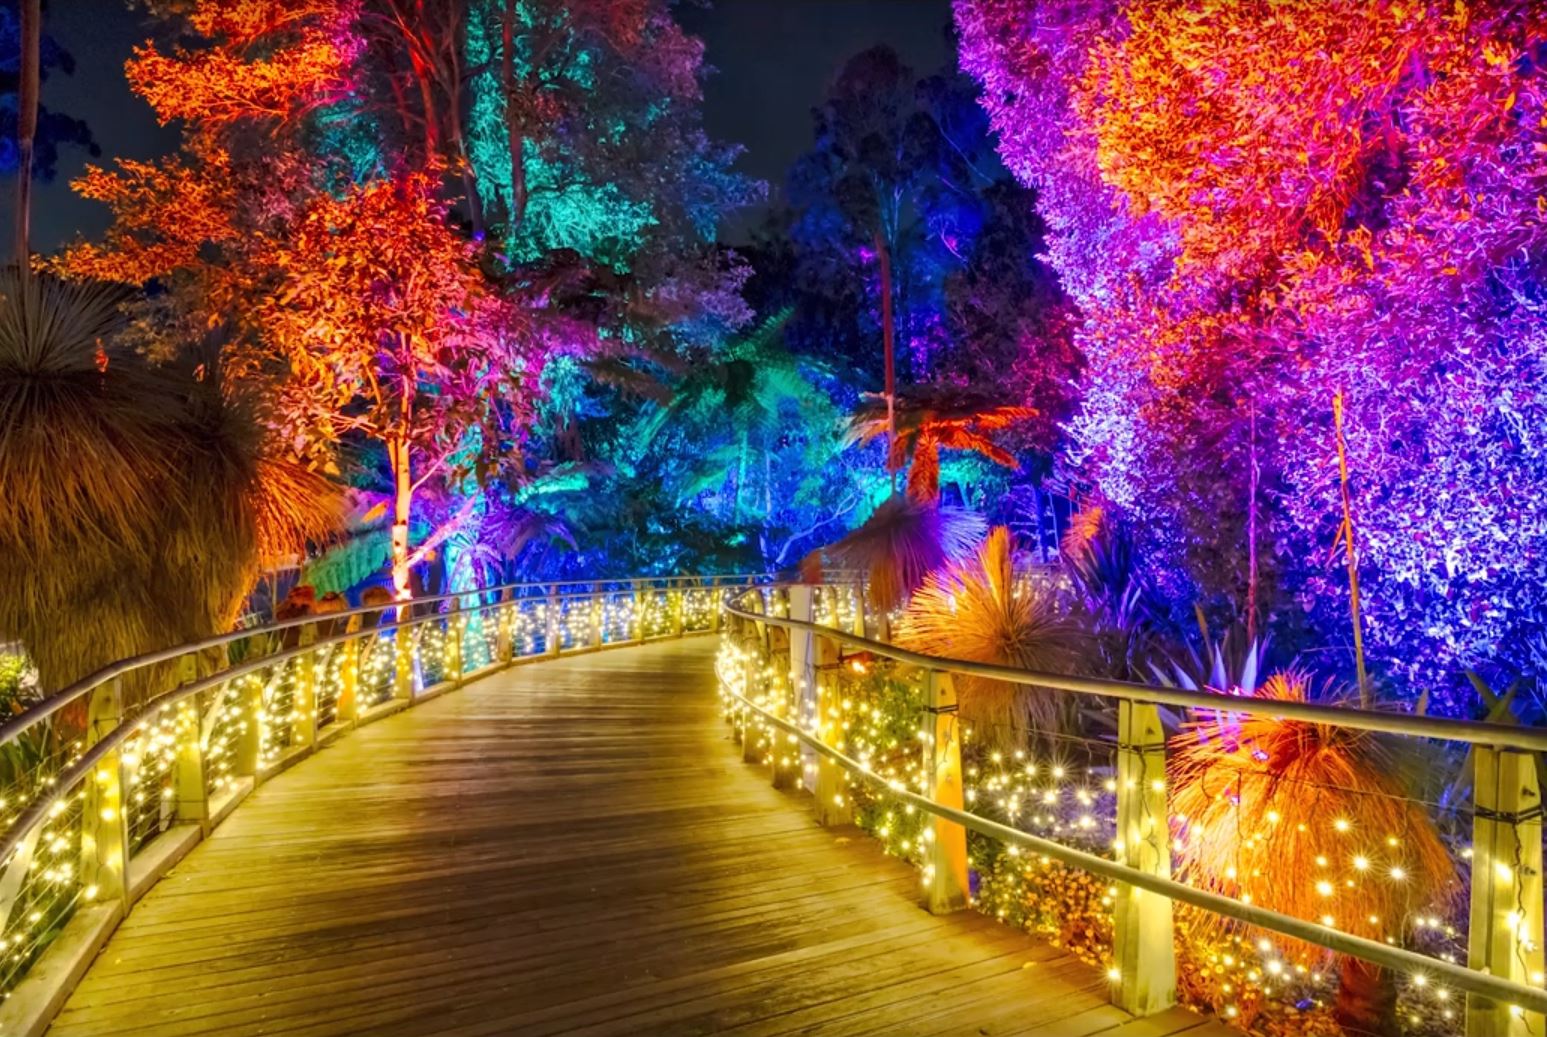 The Magical Enchanted Gardens In Roma Street Parklands Brisbane Australia Stock Photo Alamy